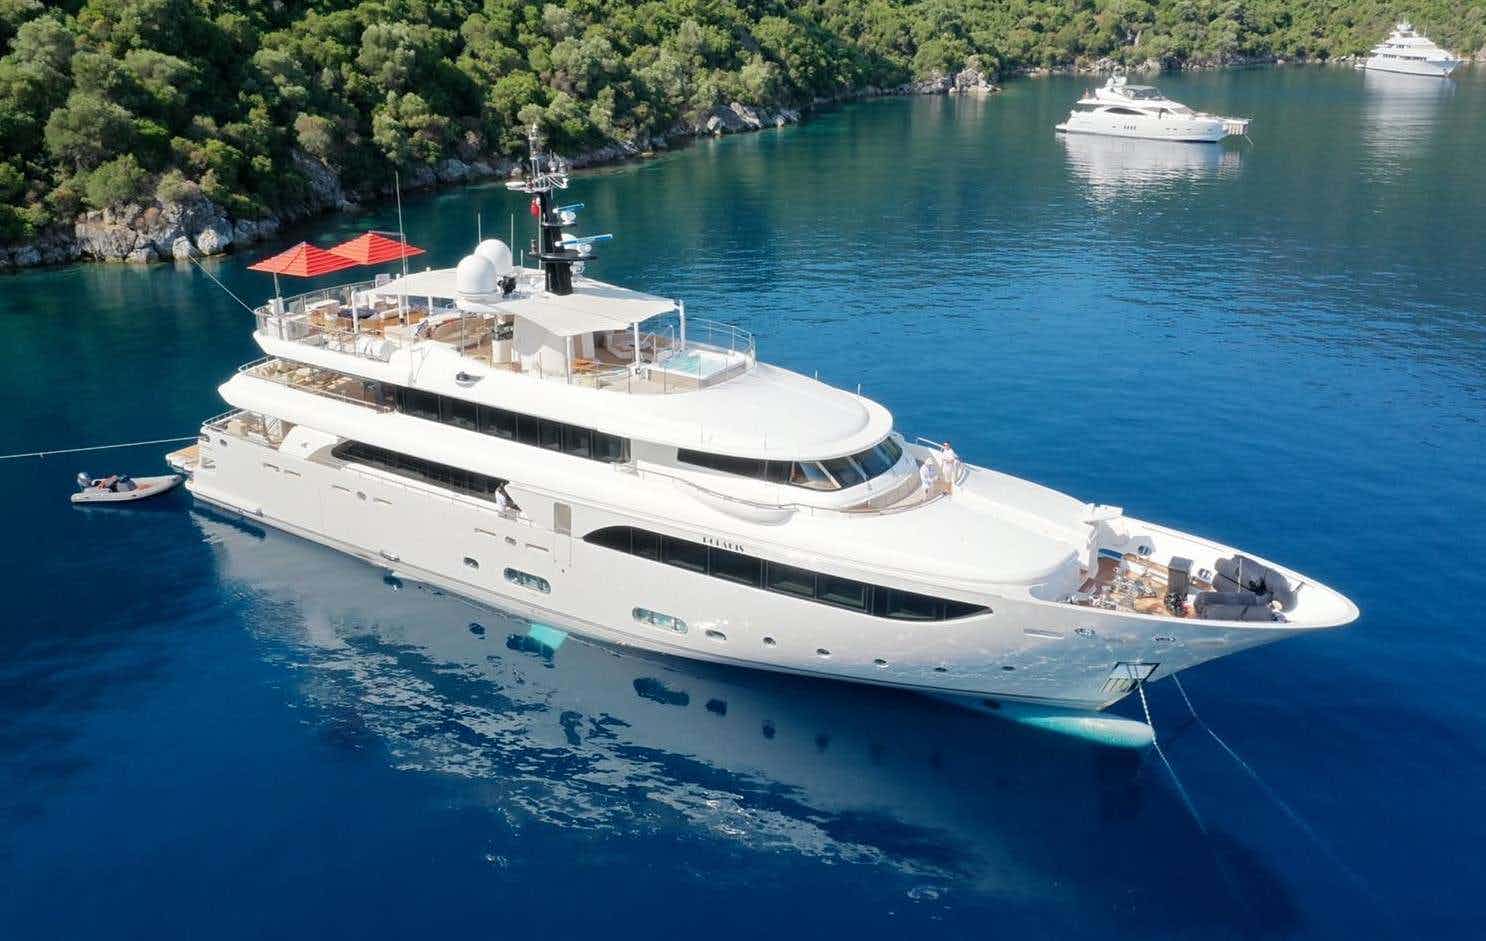 POLARIS - Yacht Charter Cheshire & Boat hire in Croatia, Greece, Turkey 1